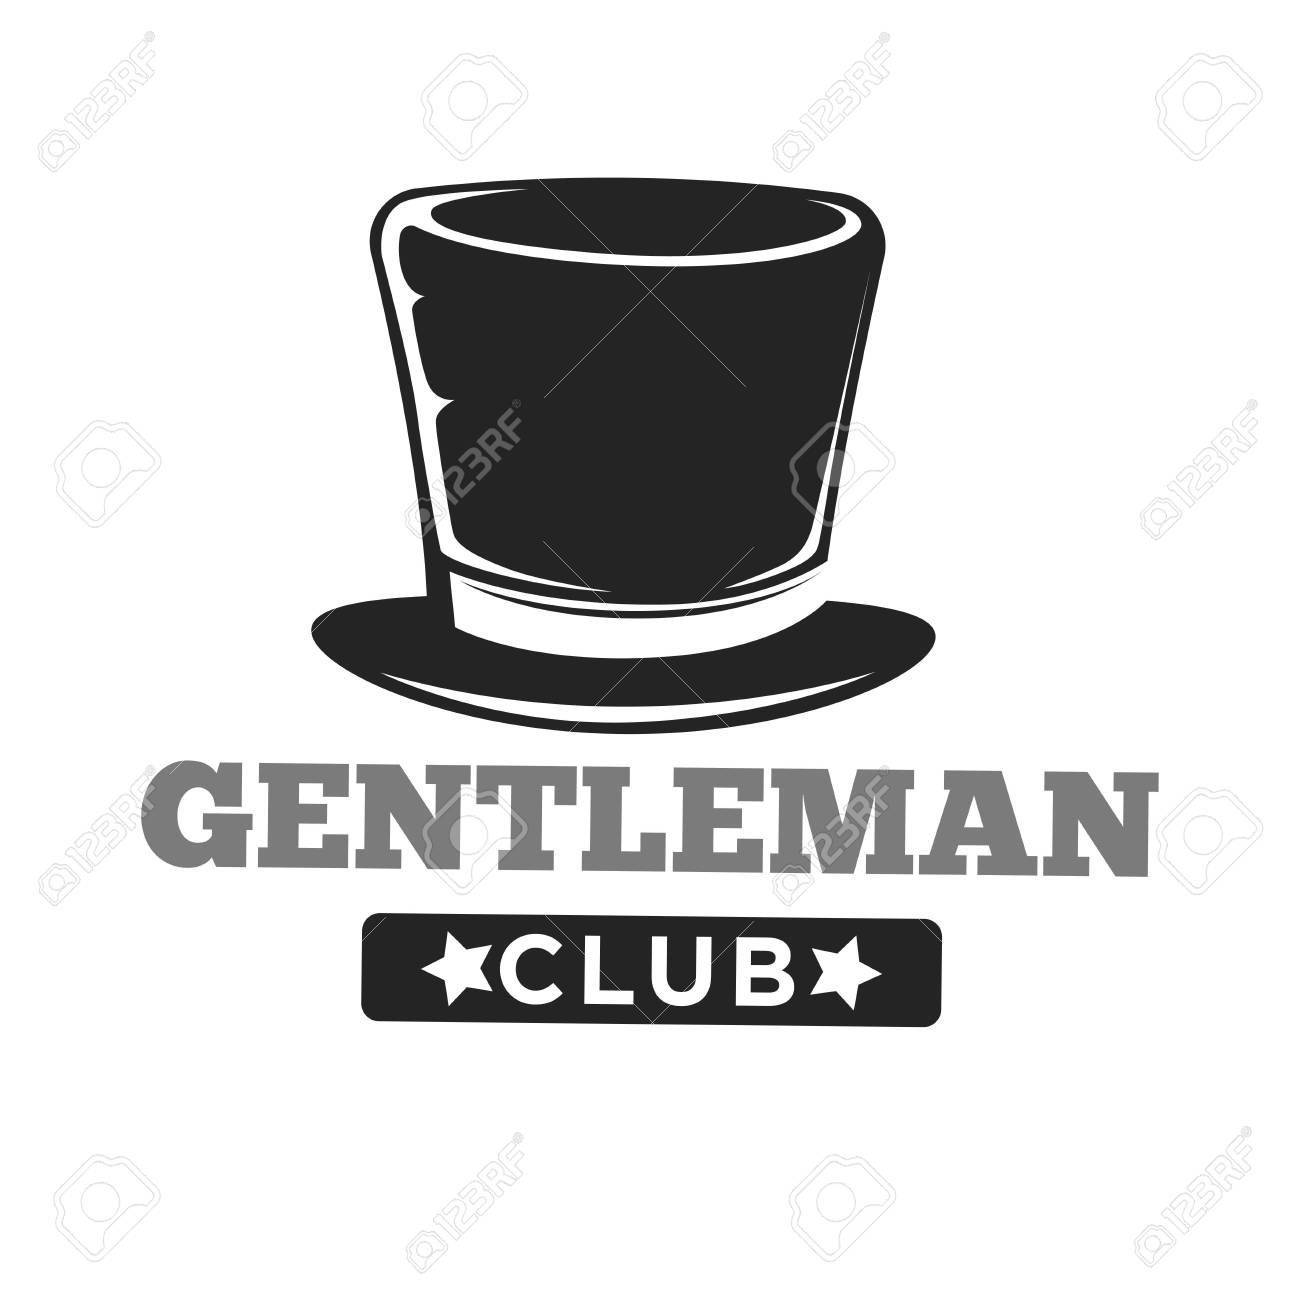 3056-gentlemen-club-logo-in-vintage-style-on-white.jpg